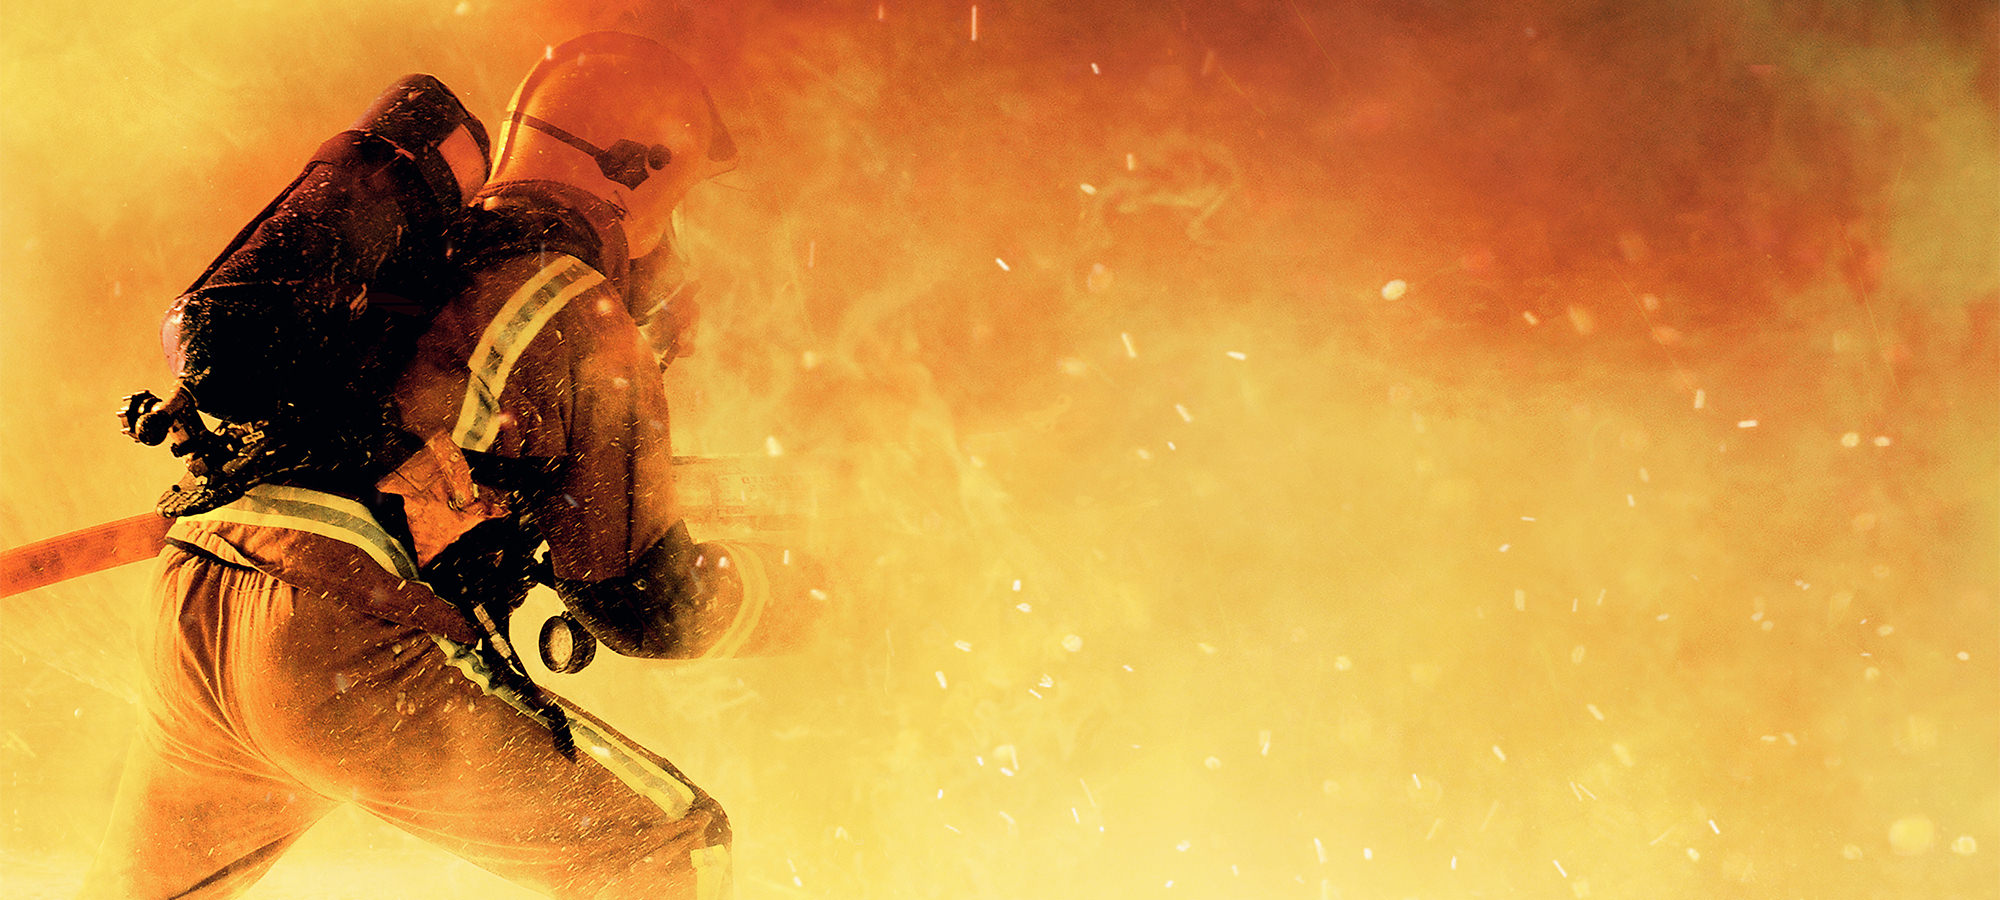 Firefighter image